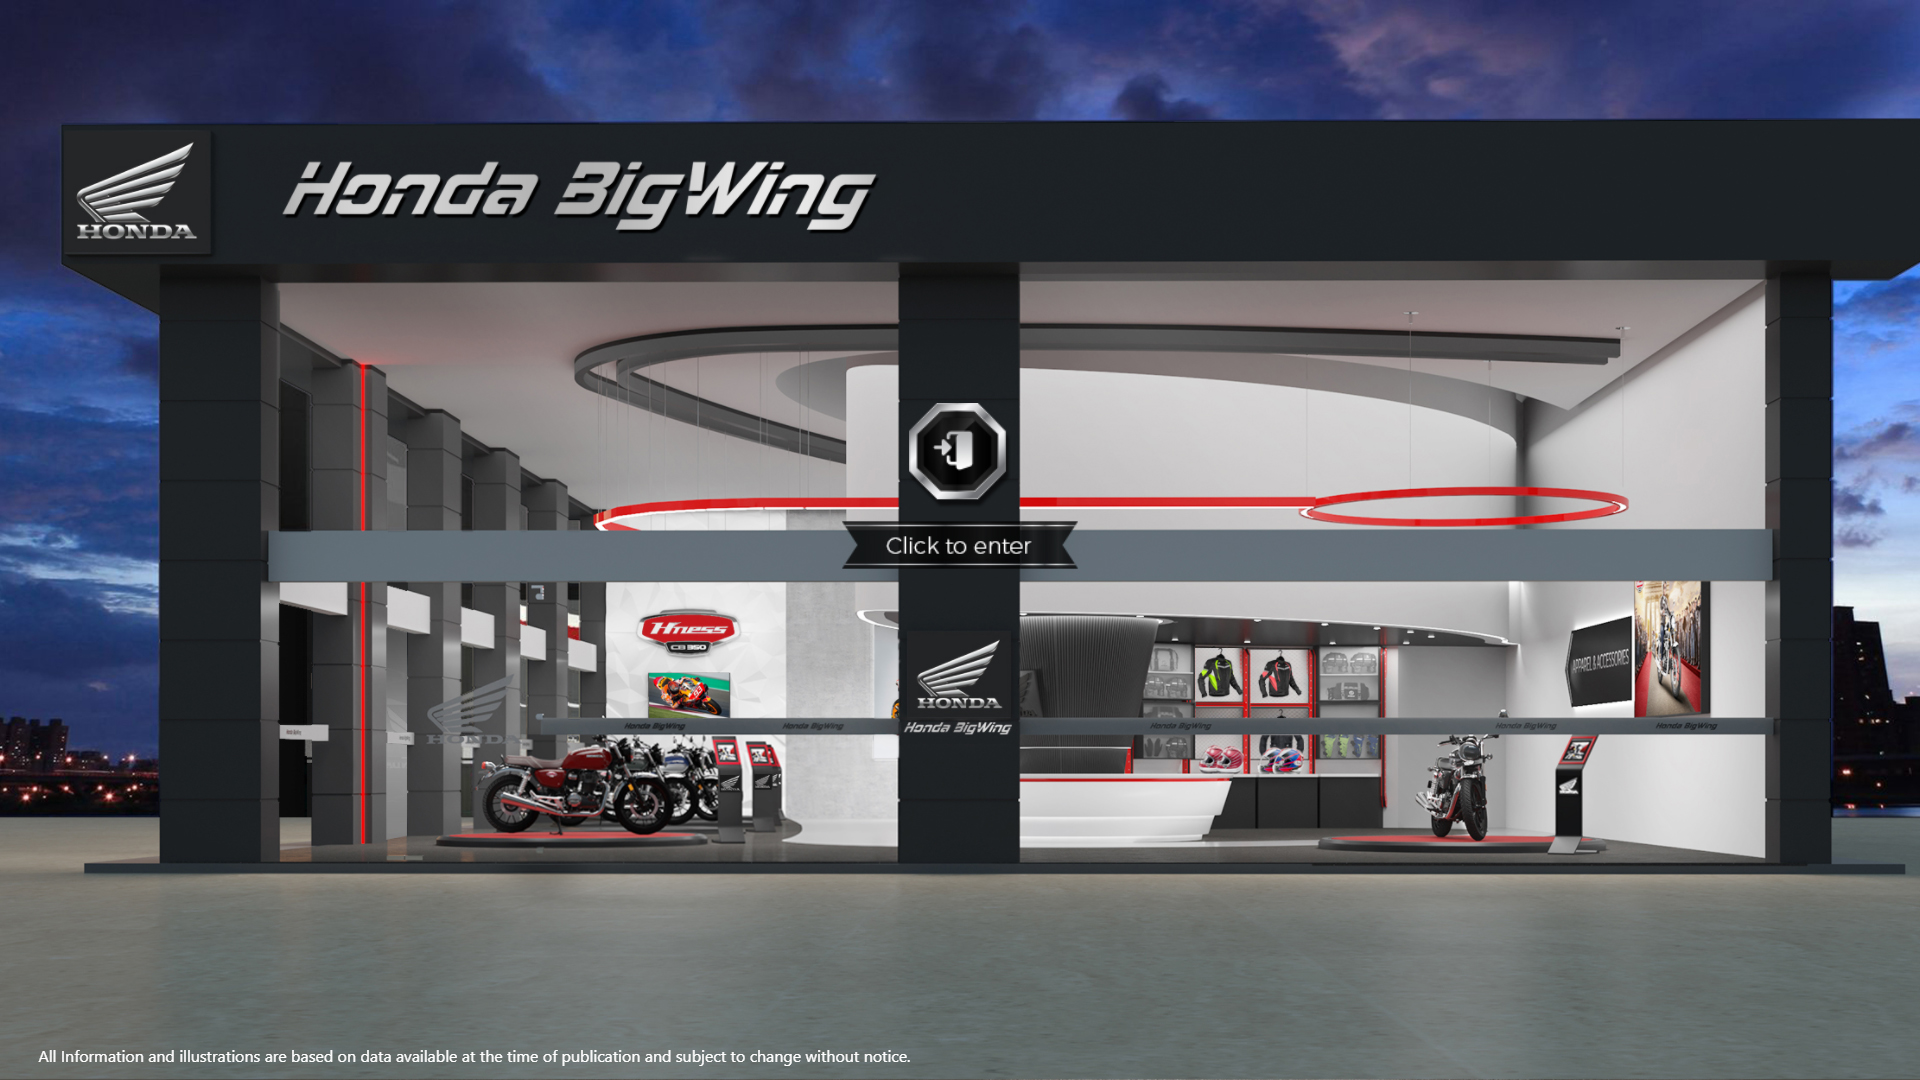 honda-2wheelers-india-brings-immersive-digital-experience-for-its-customers